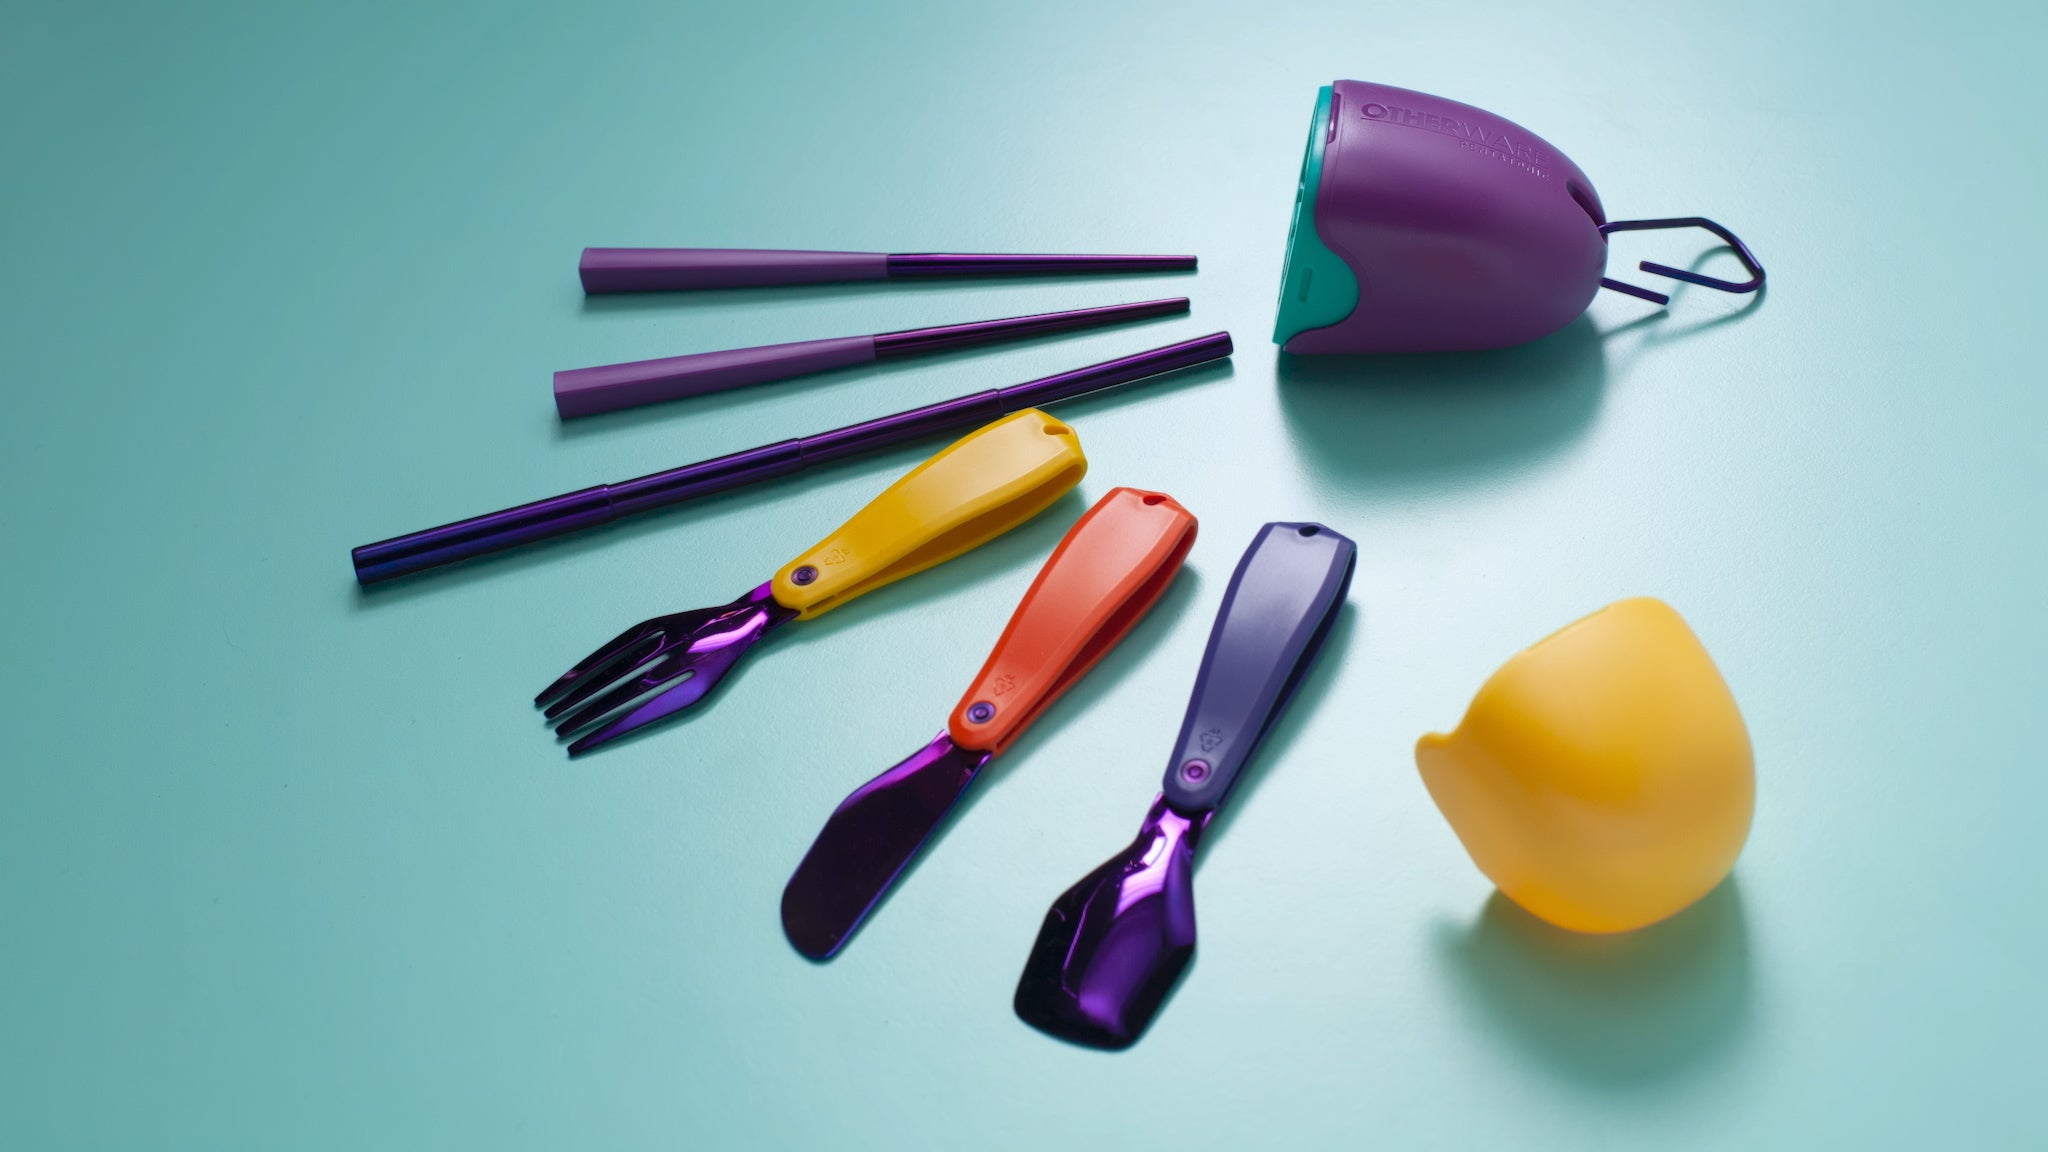 otherware pebble cutlery set case campaign shot